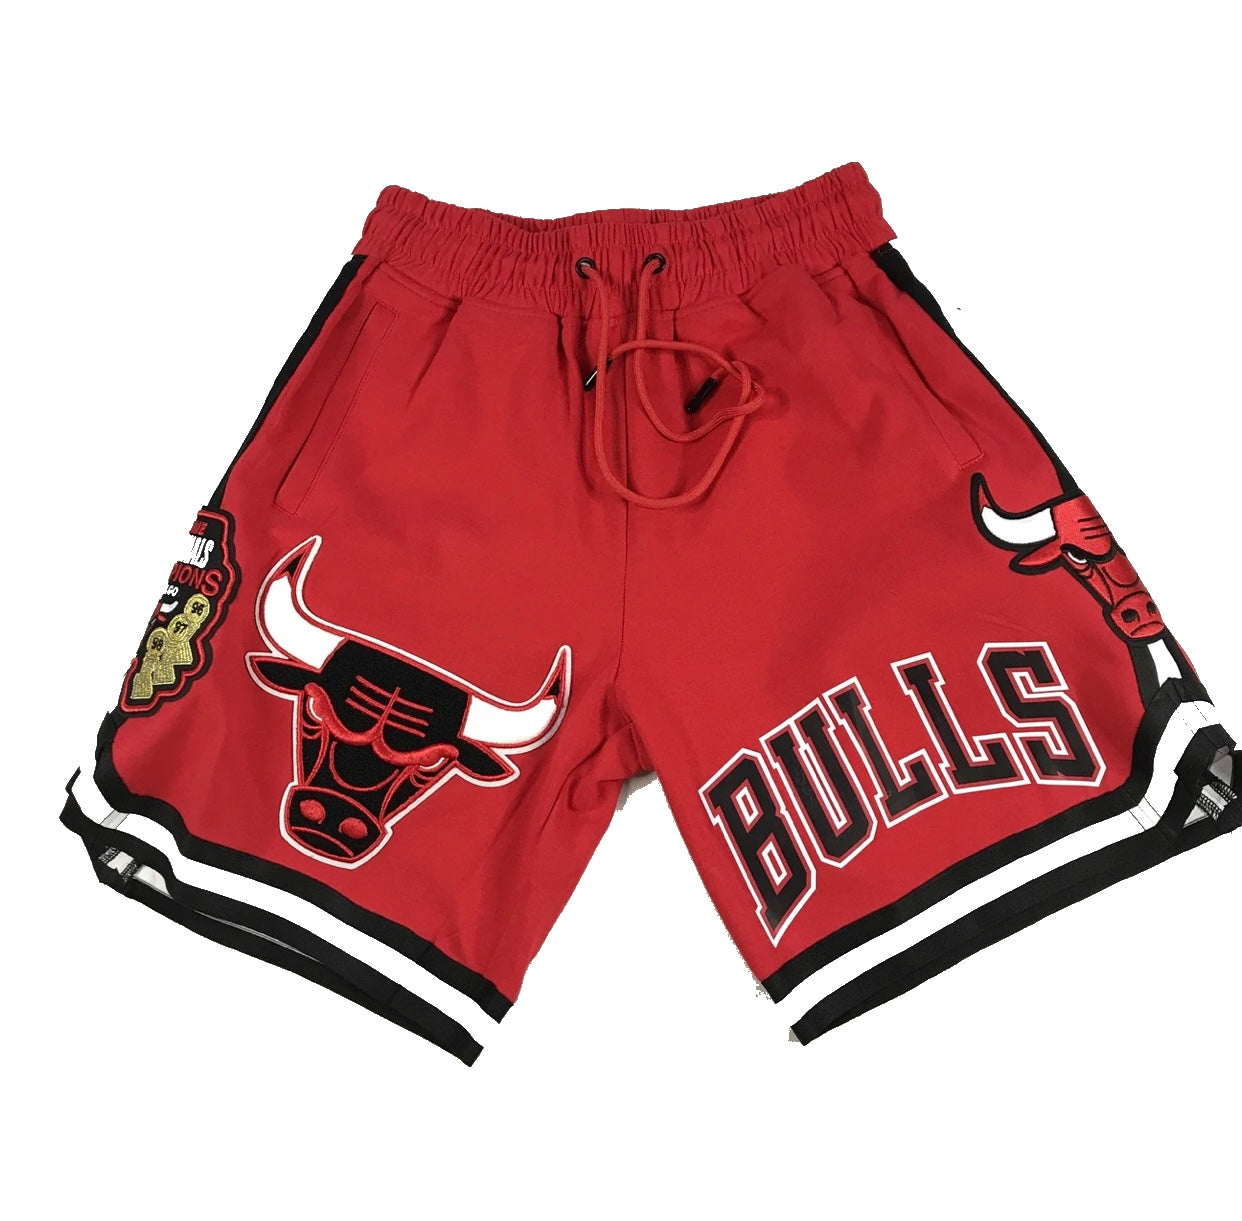 Pro Standard NBA Chicago Bulls Pro Team Black/Red Men's Shorts BCB351809-BLK - XL